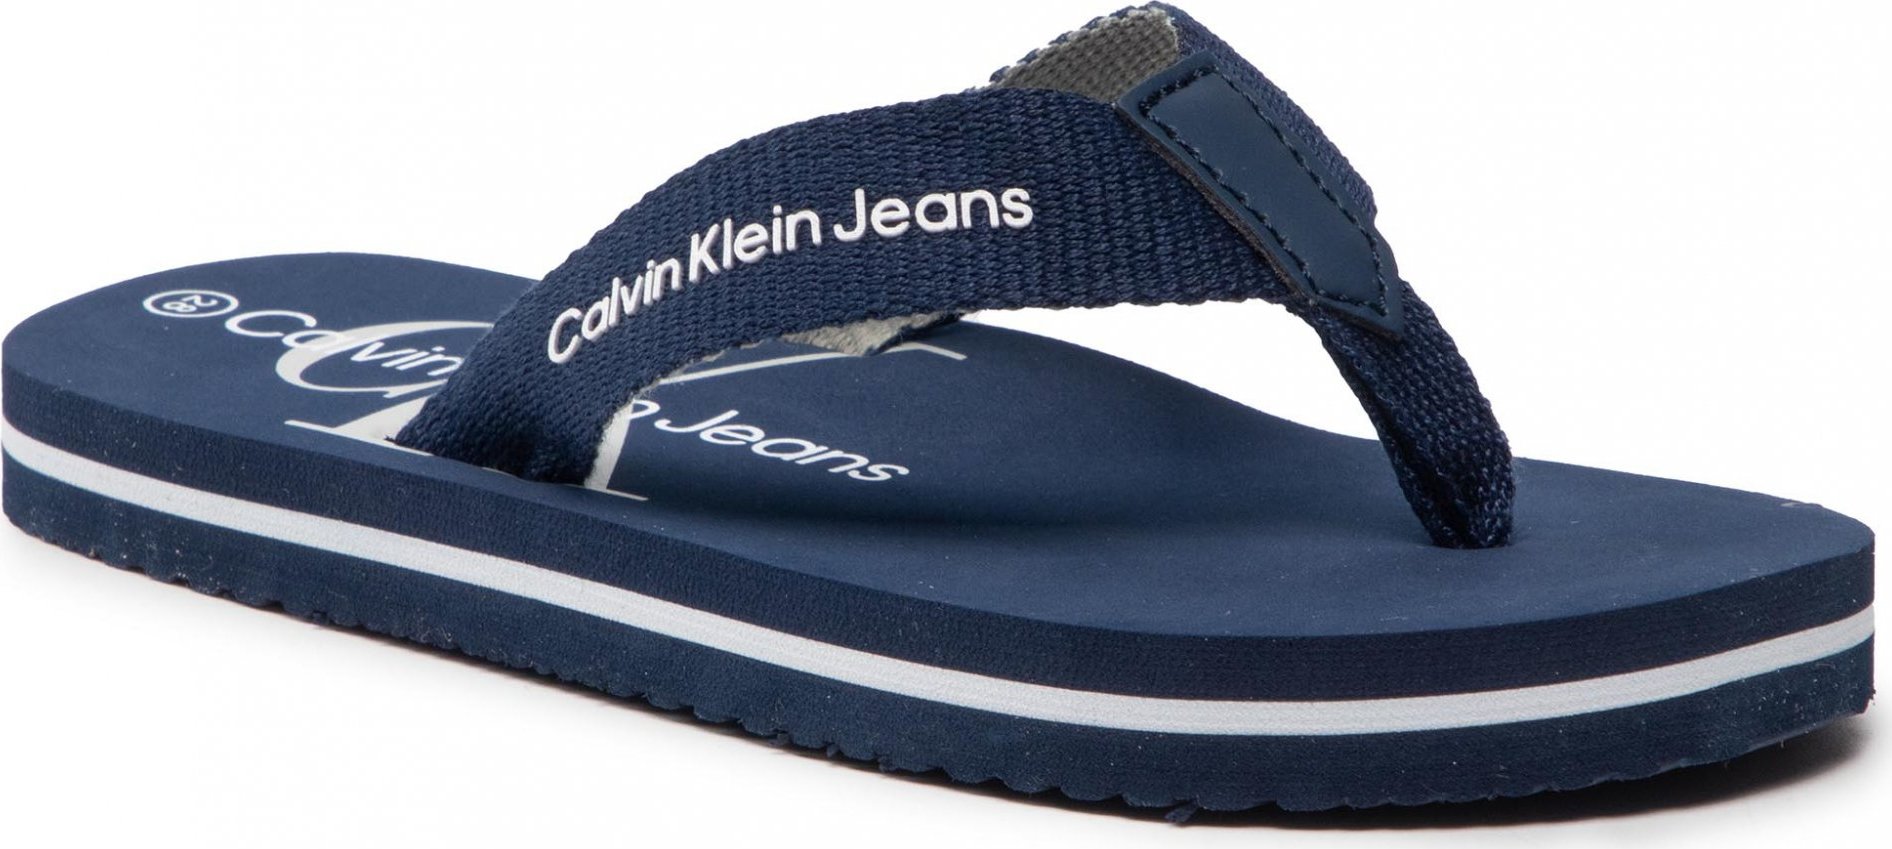 Calvin Klein Jeans Logo Print Flip Flop V3B8-80155-0058 M